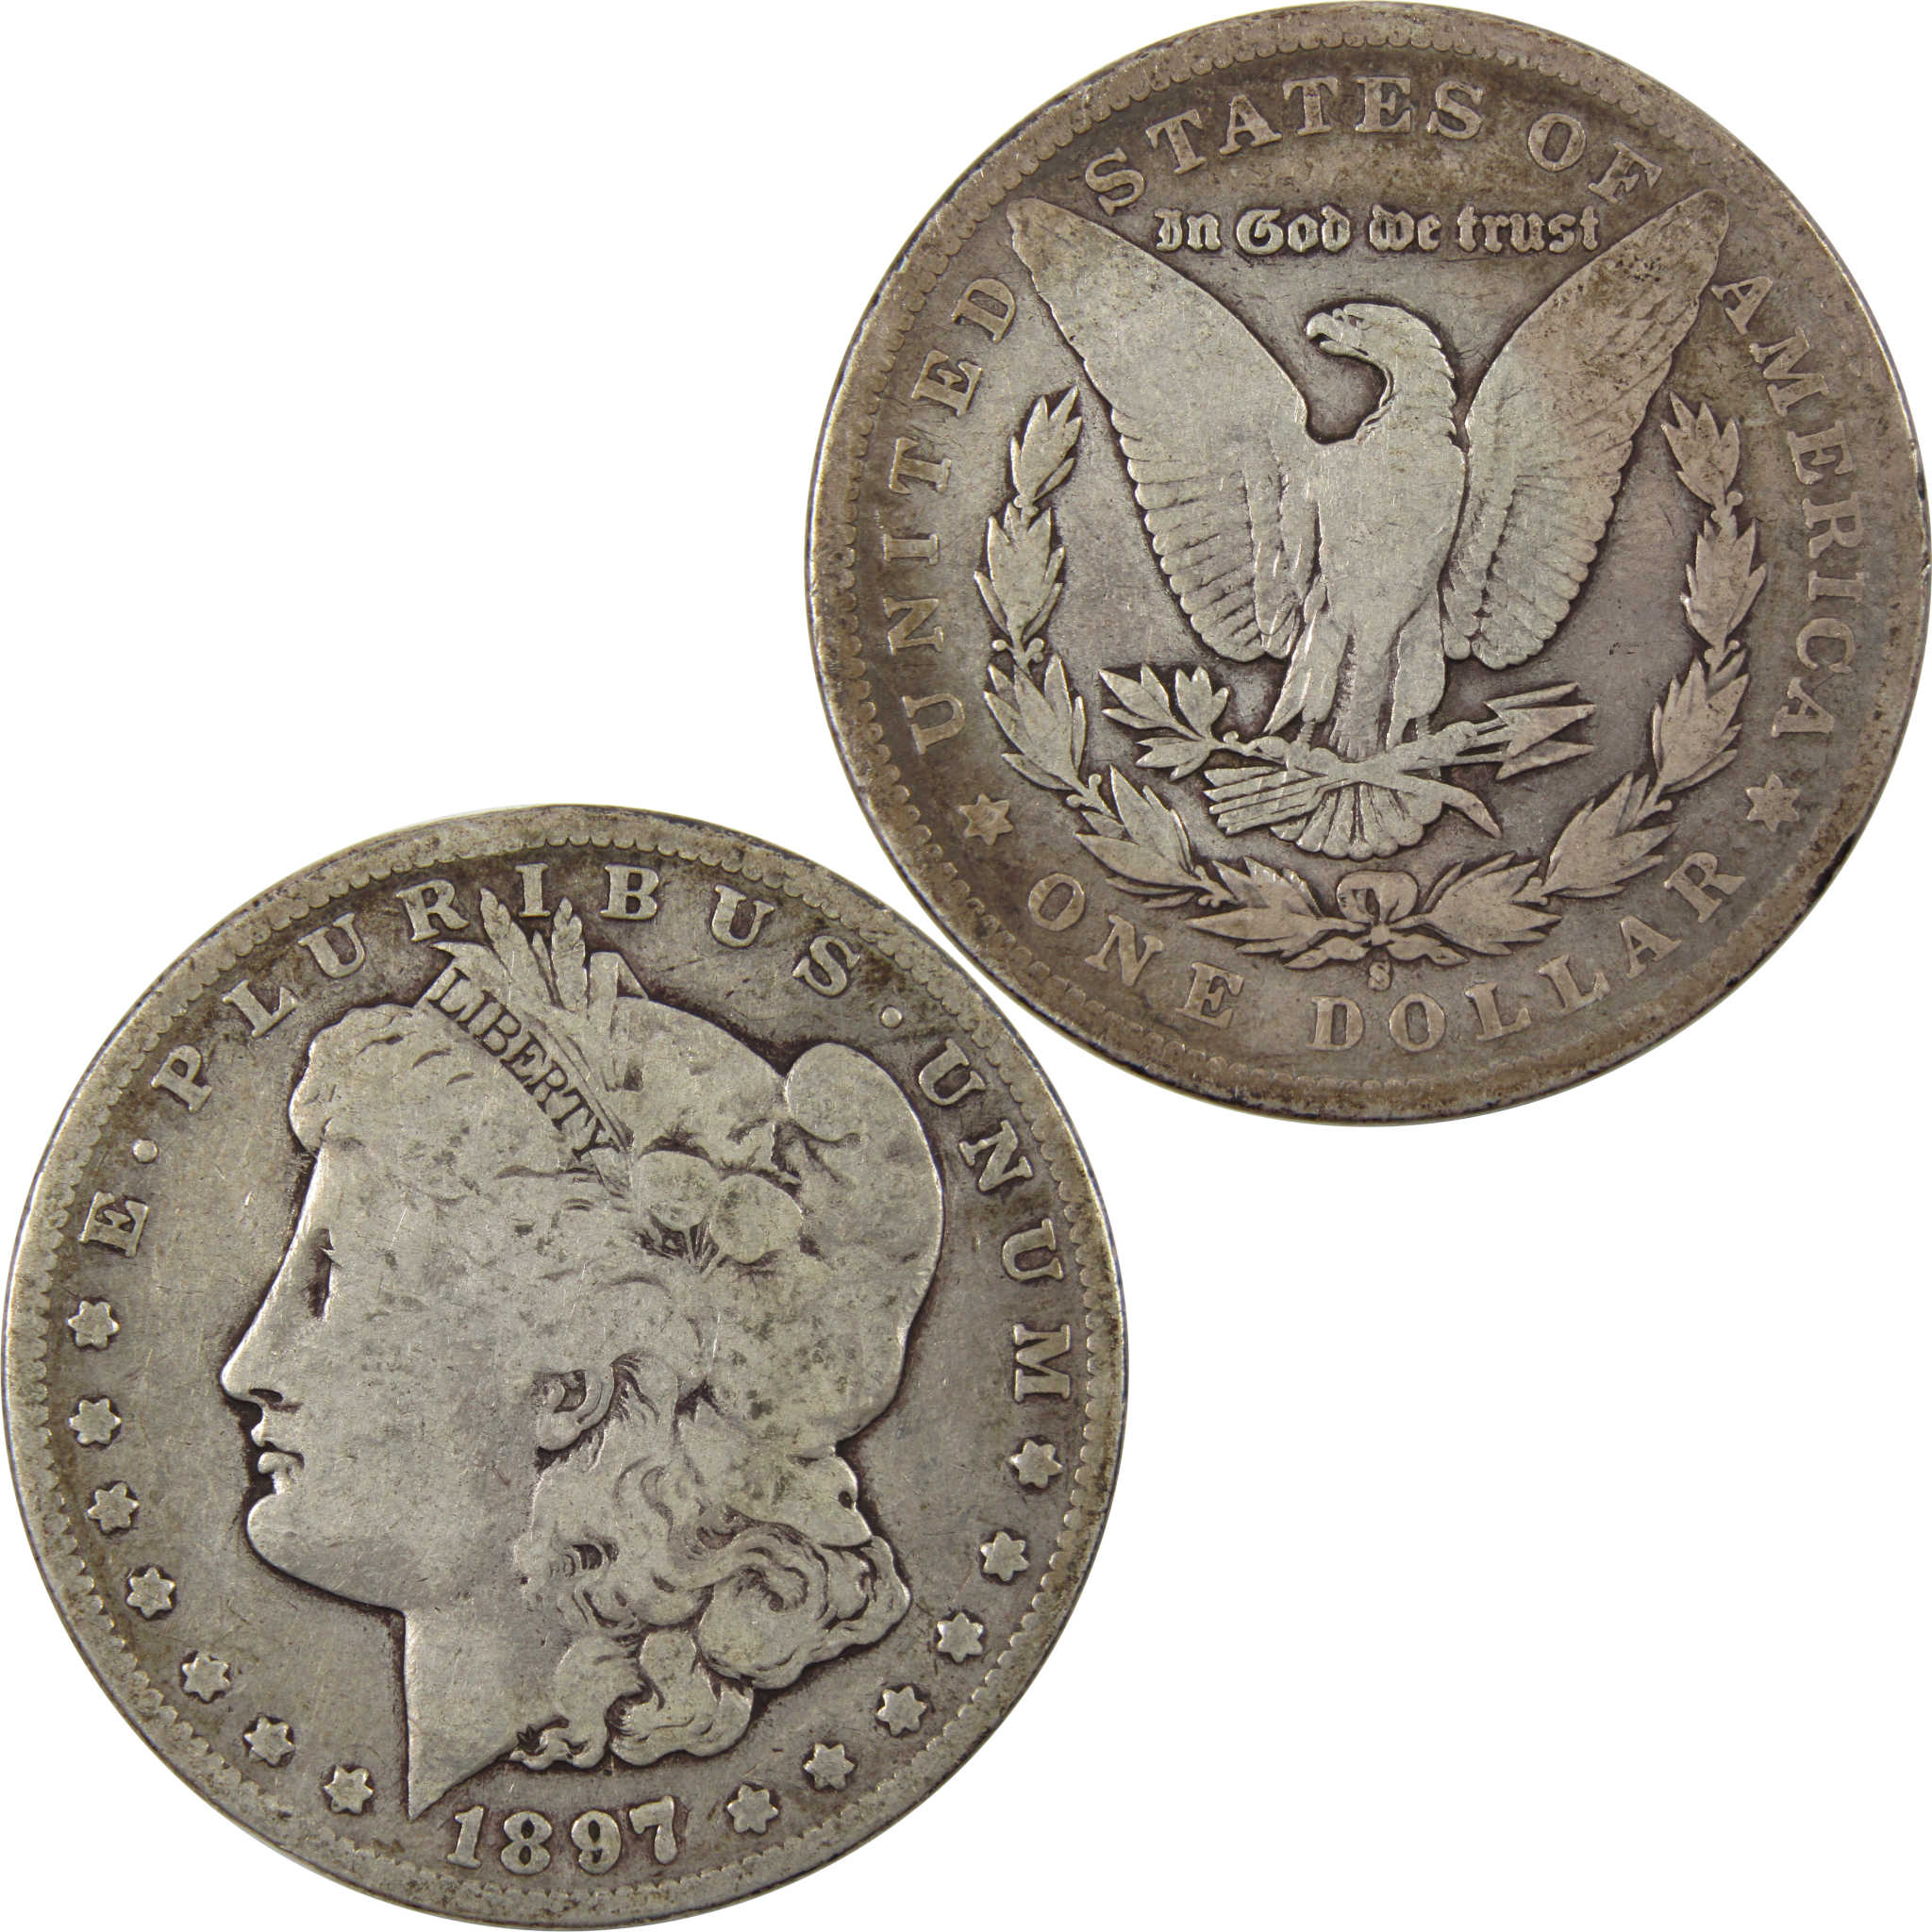 1897 S Morgan Dollar VG Very Good Silver $1 Coin SKU:I10211 - Morgan coin - Morgan silver dollar - Morgan silver dollar for sale - Profile Coins &amp; Collectibles